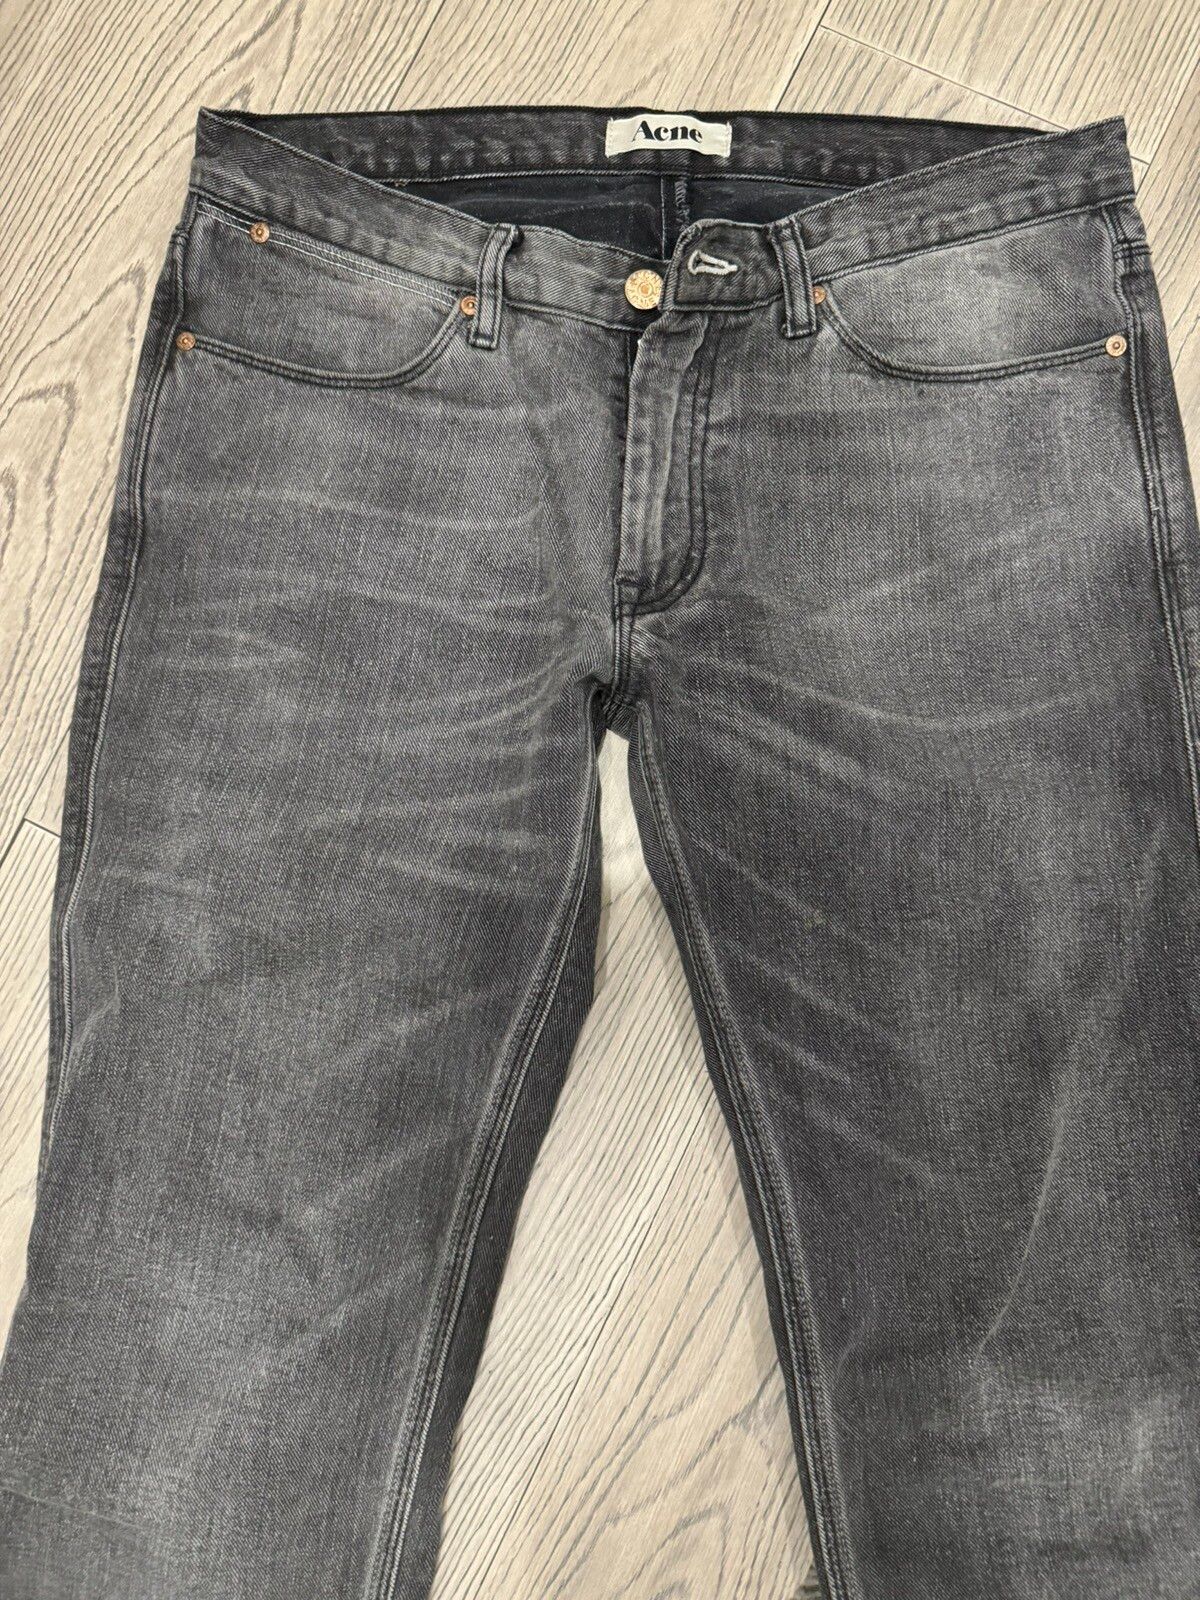 Acne Studios Acne studio jeans Size US 32 / EU 48 - 2 Preview